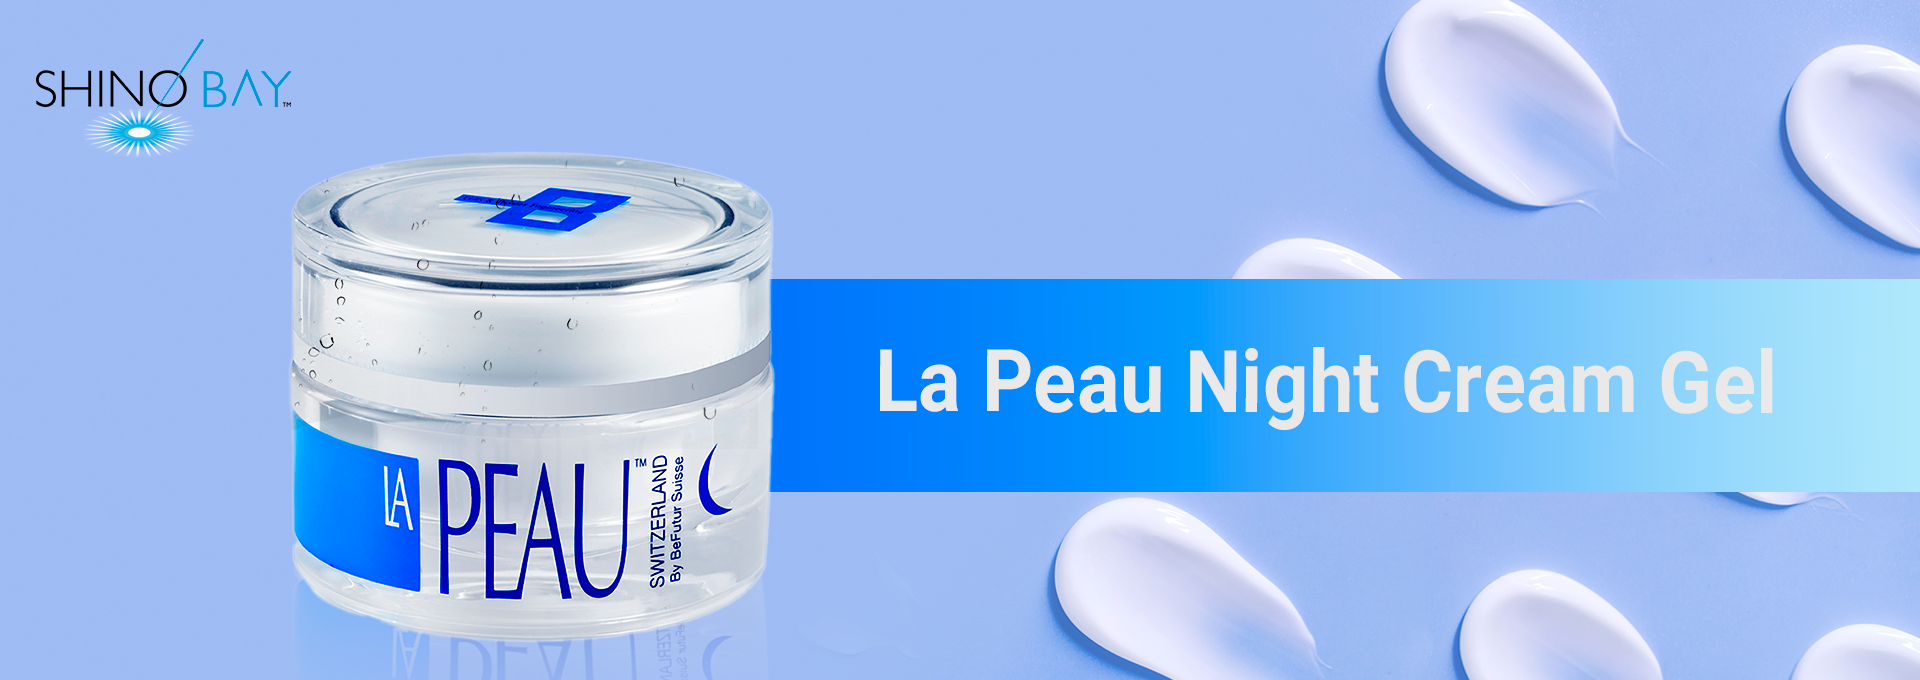 La Peau Night Cream Gel